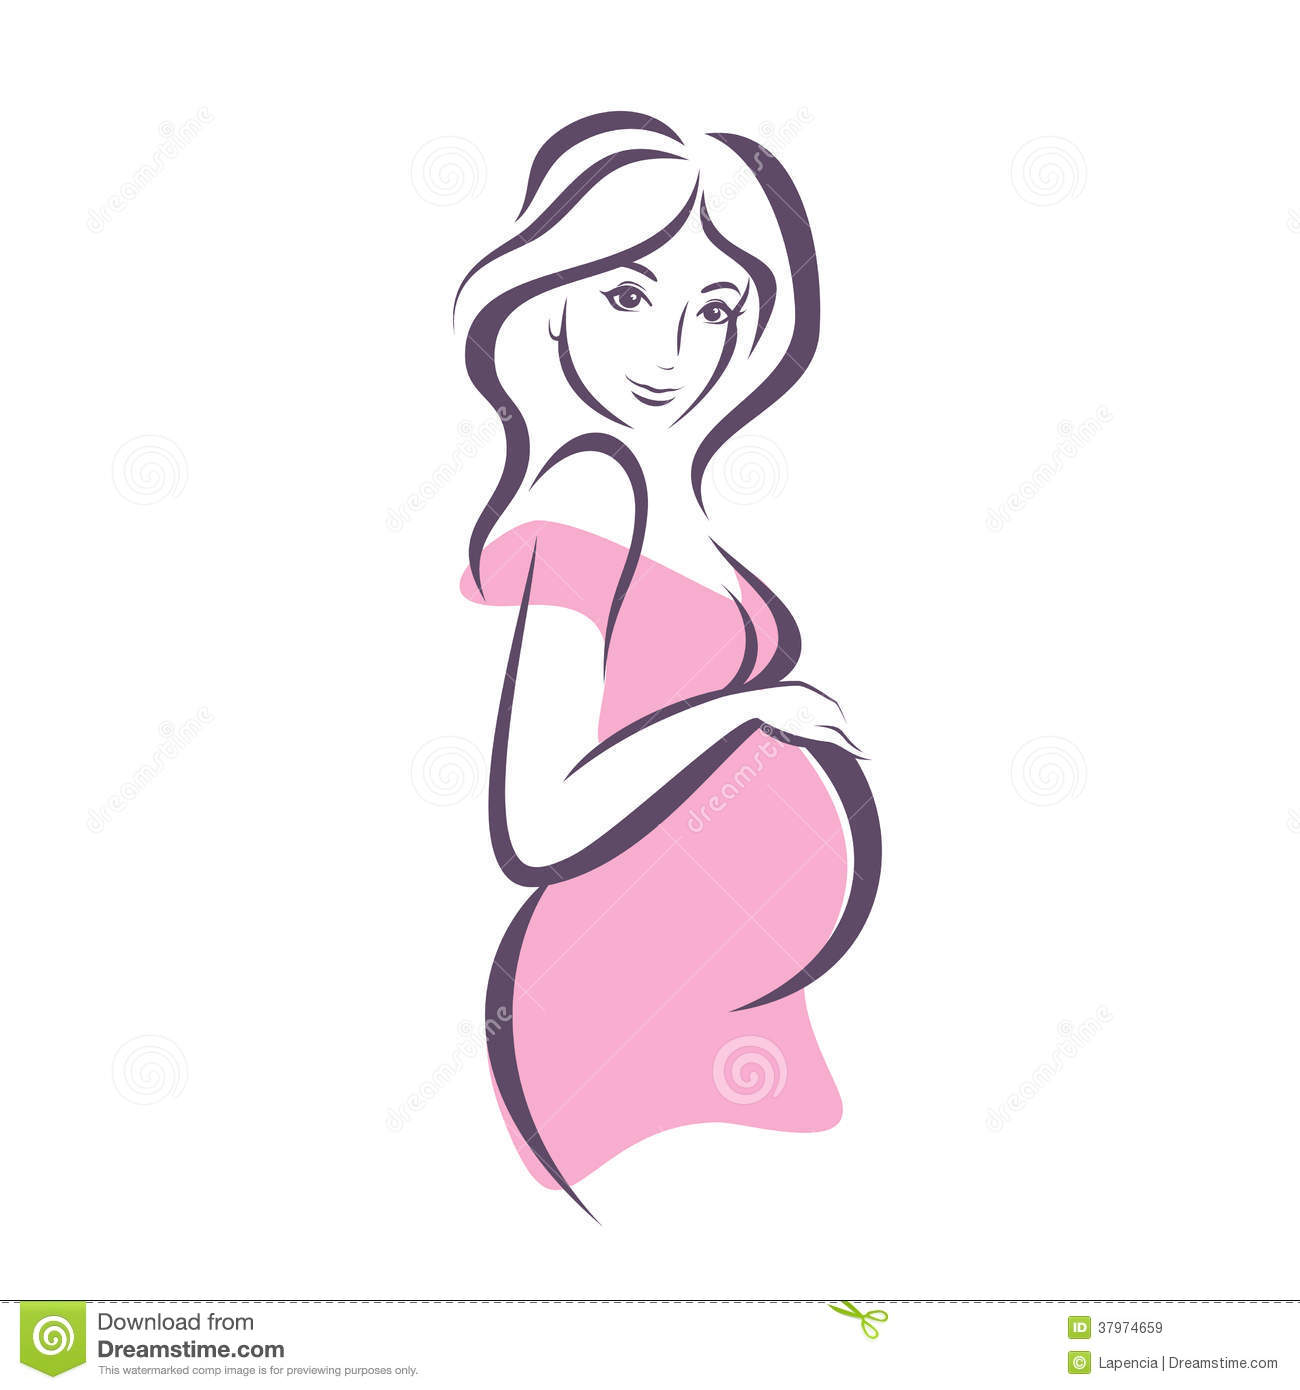 Pregnancy clipart pregnant .